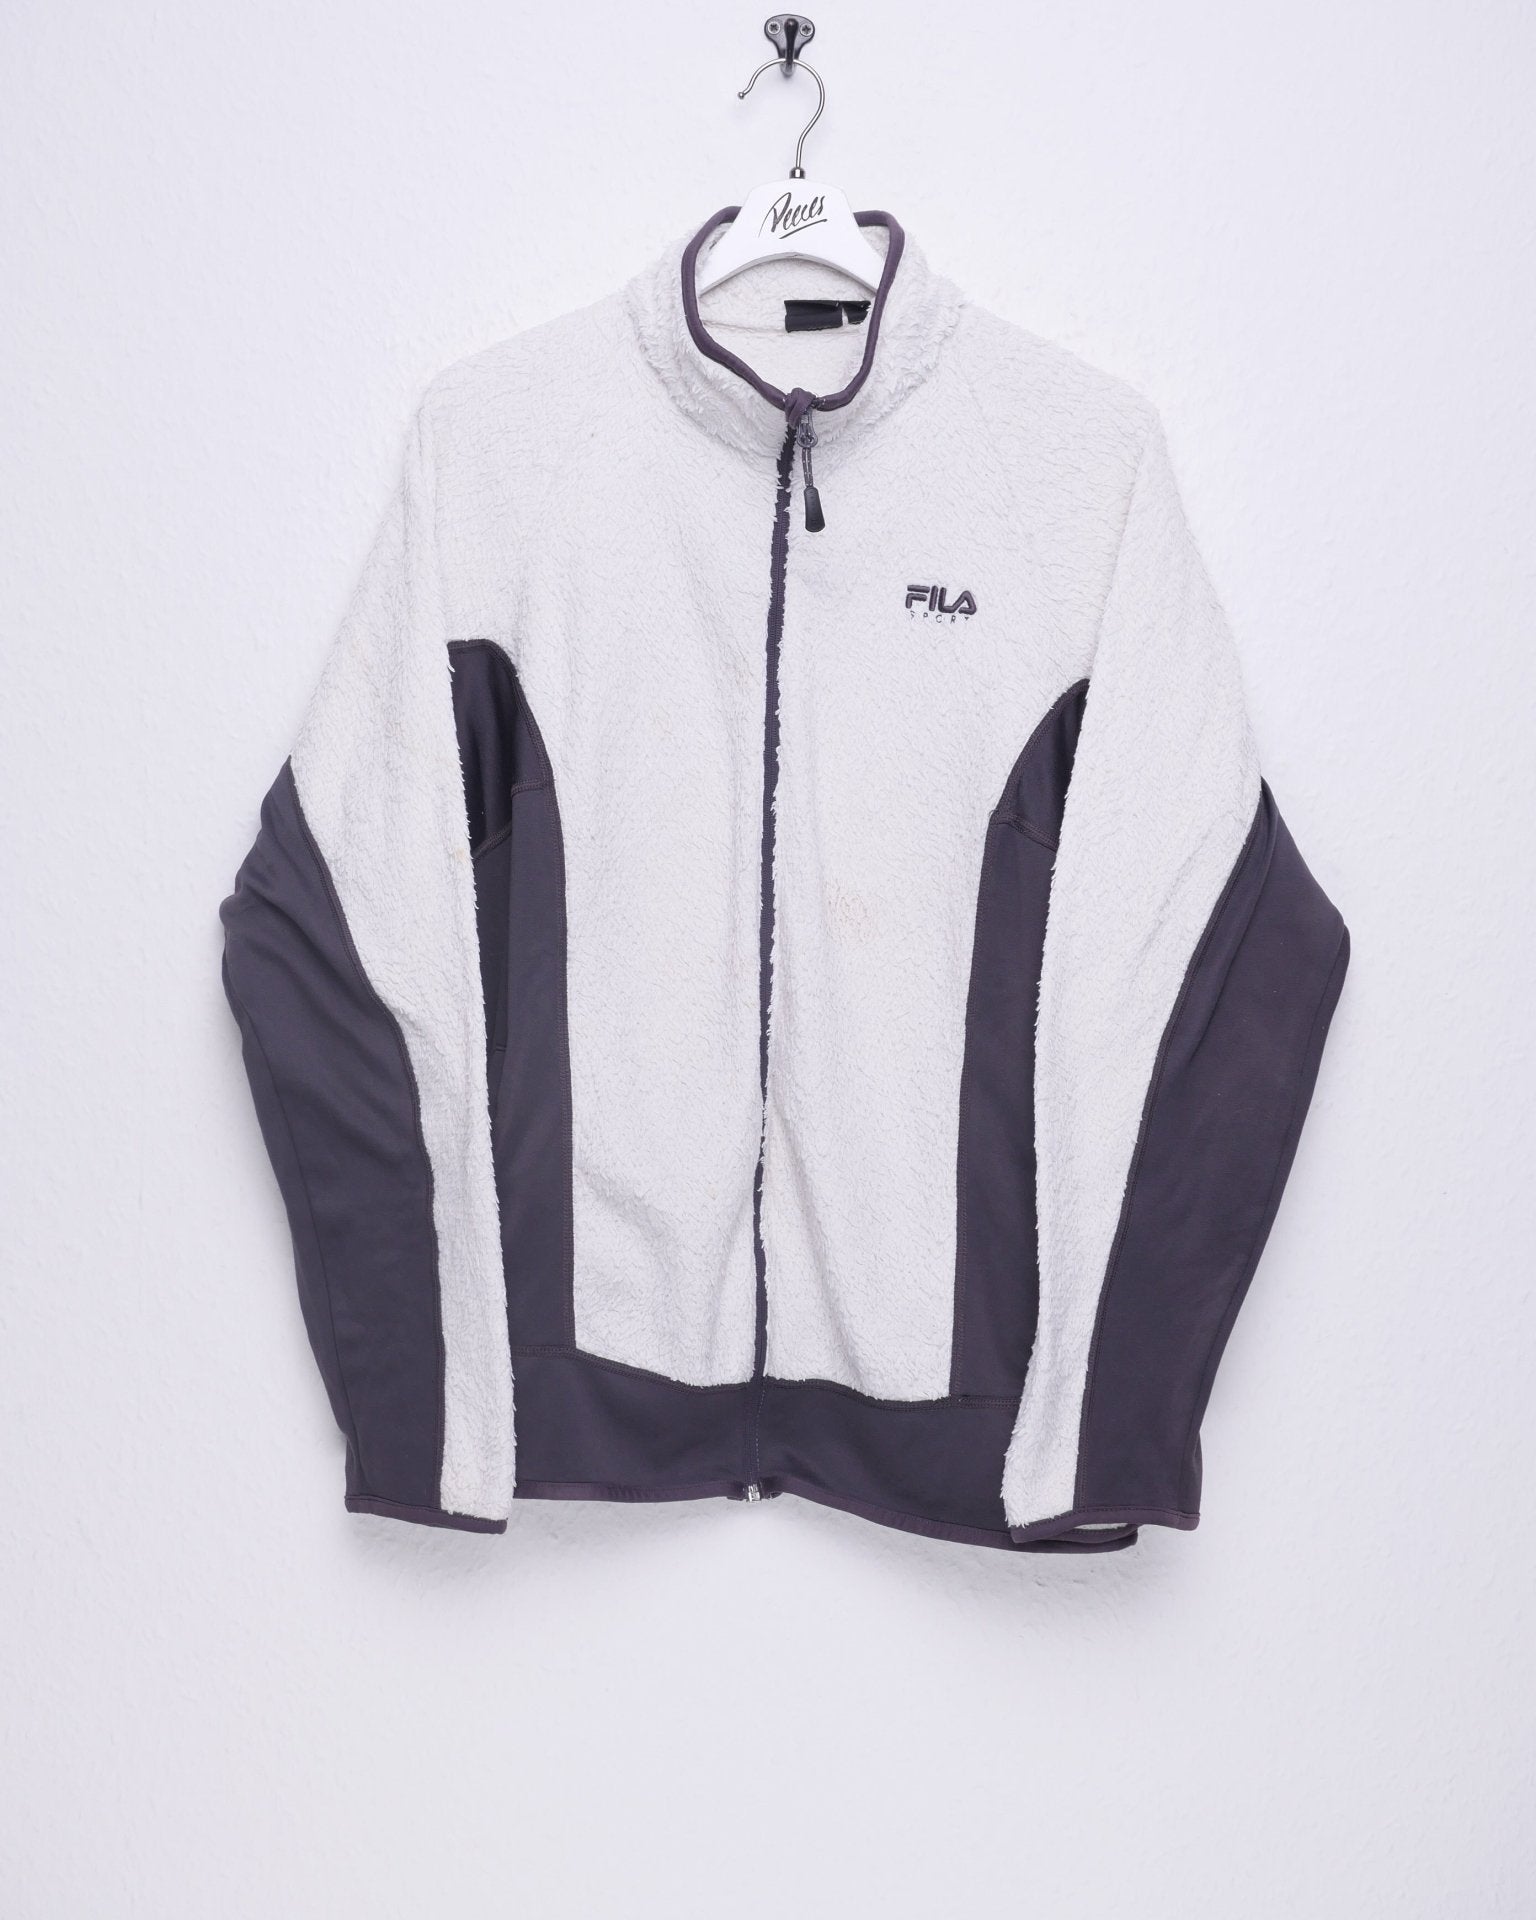 Fila Sport embroidered Logo two toned Fleece Zip Sweater - Peeces